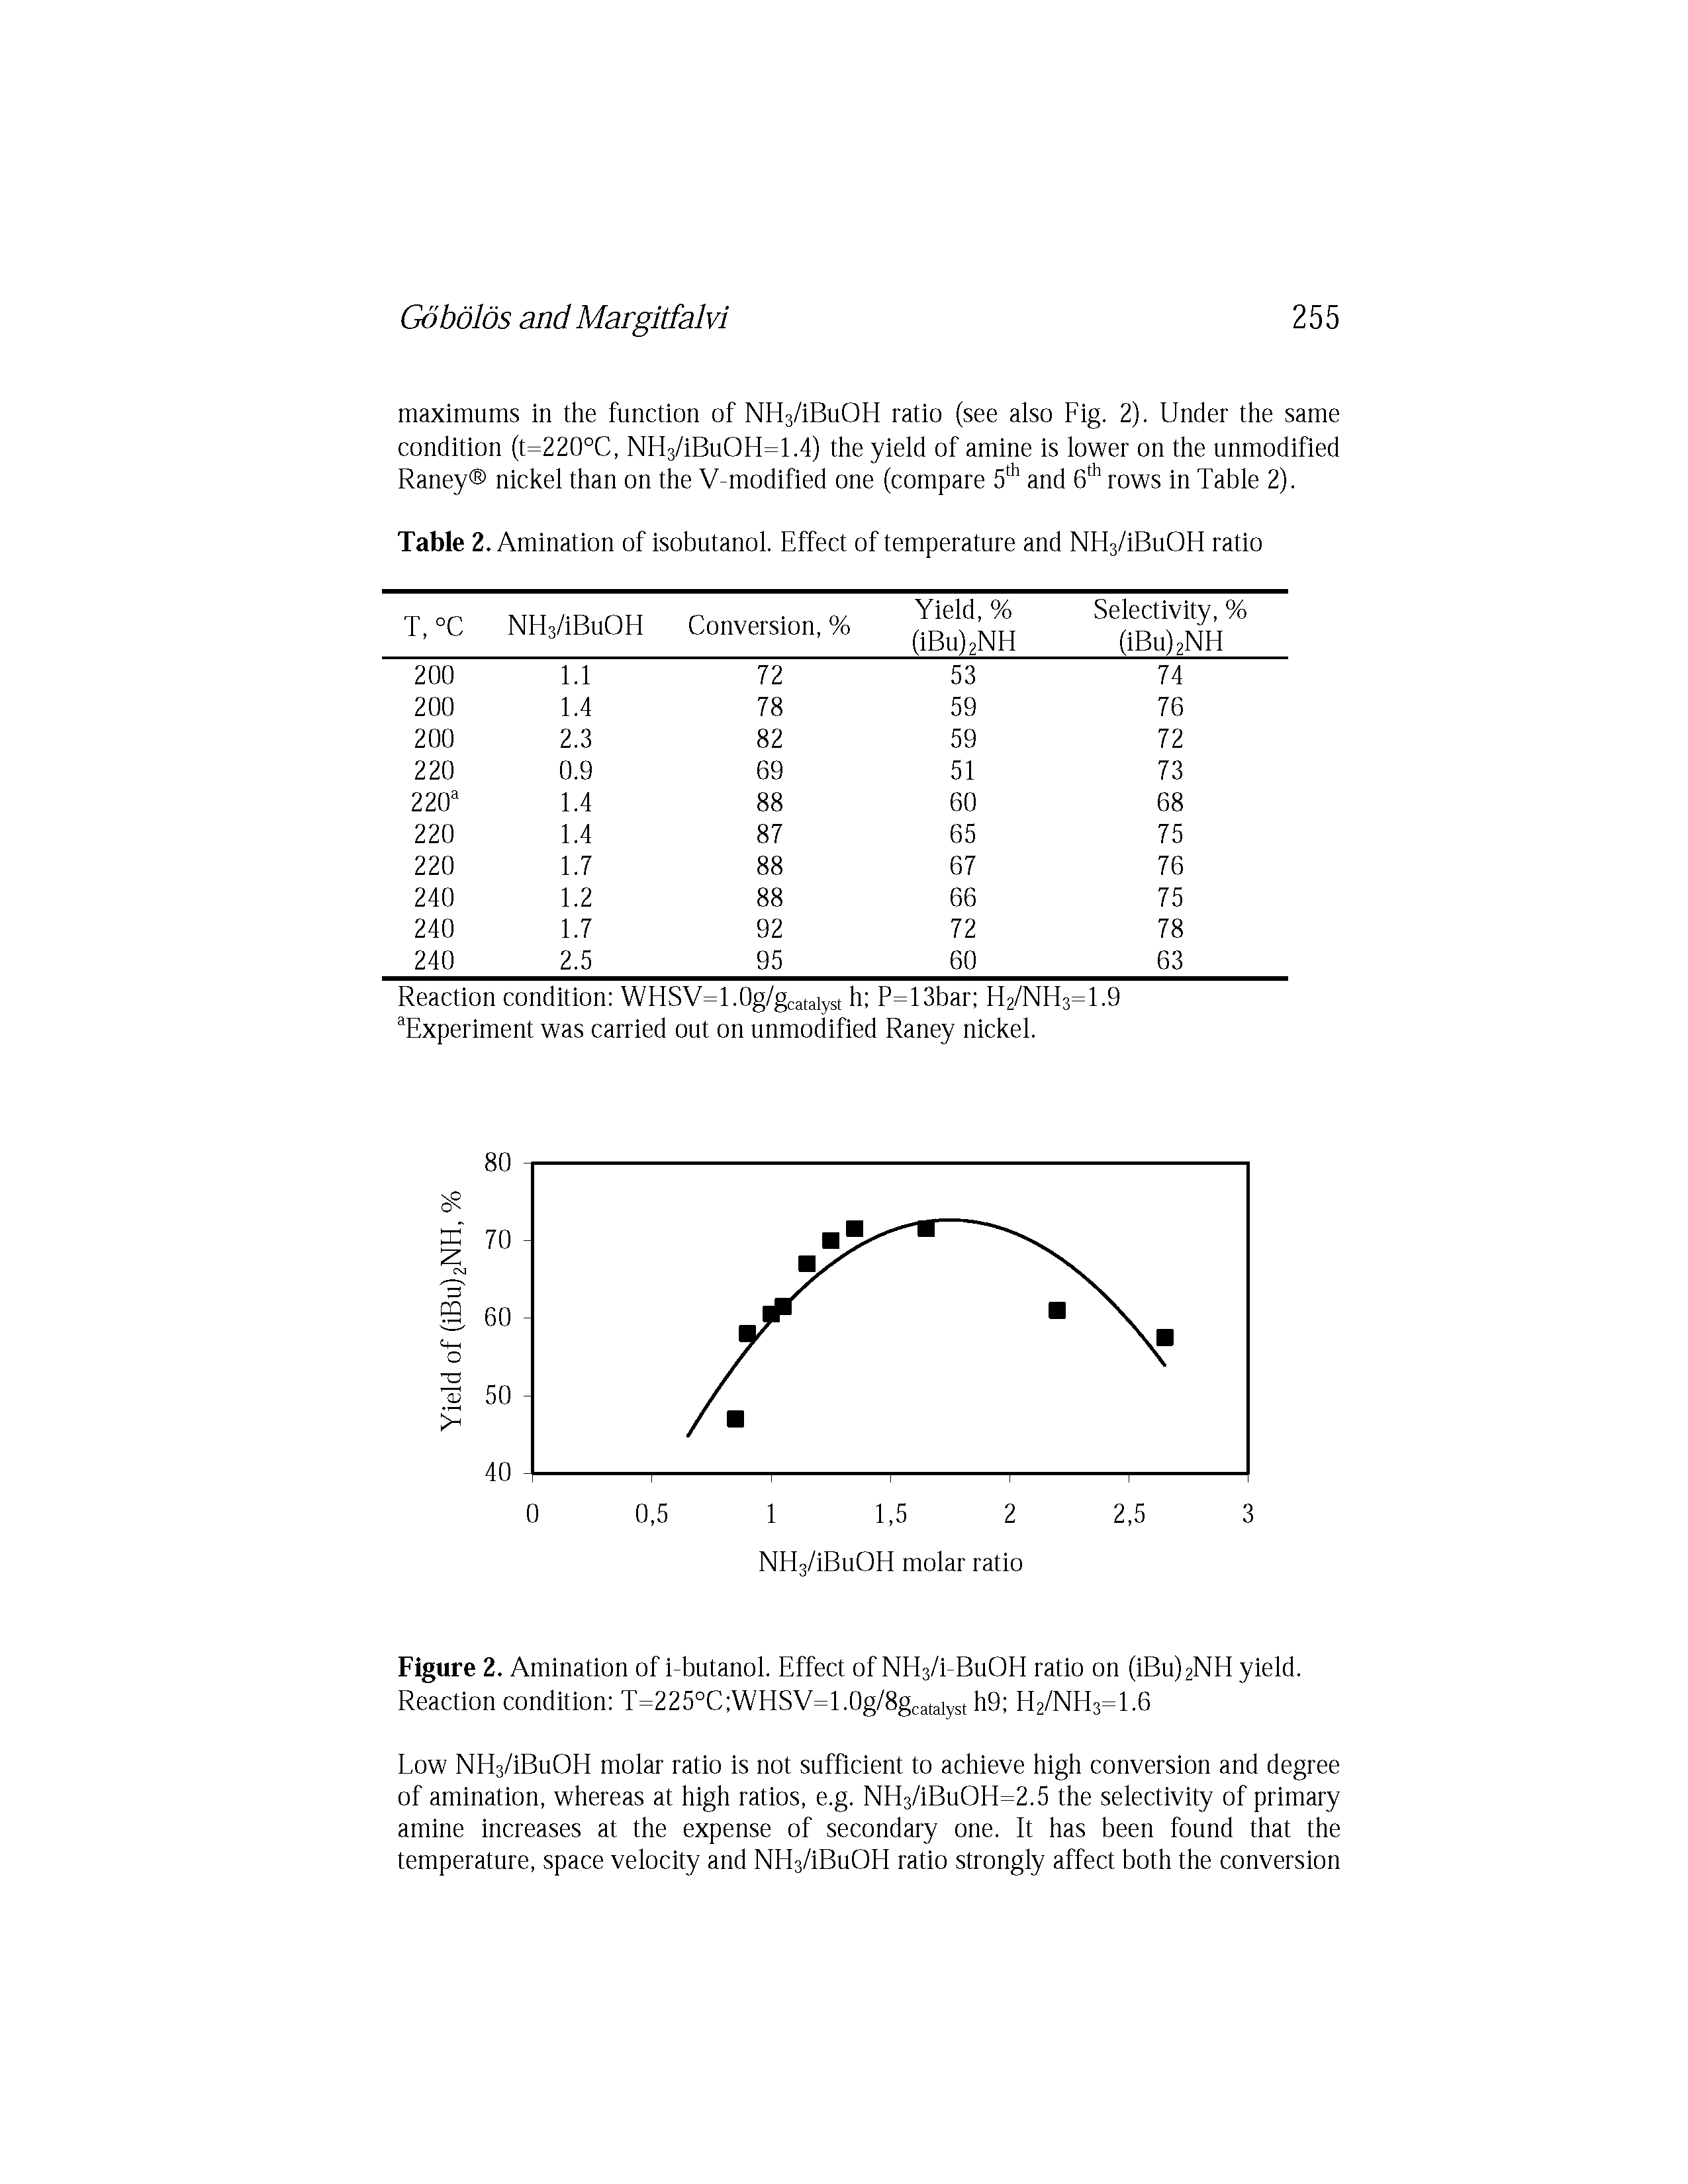 Figure 2. Amination of i-butanol. Effect of NFl3/i-BuOFl ratio on (iBu)2NFl yield. Reaction condition T=225°C WFlSV=1.0g/8gcataiyst h9 Fl2/NFl3=1.6...